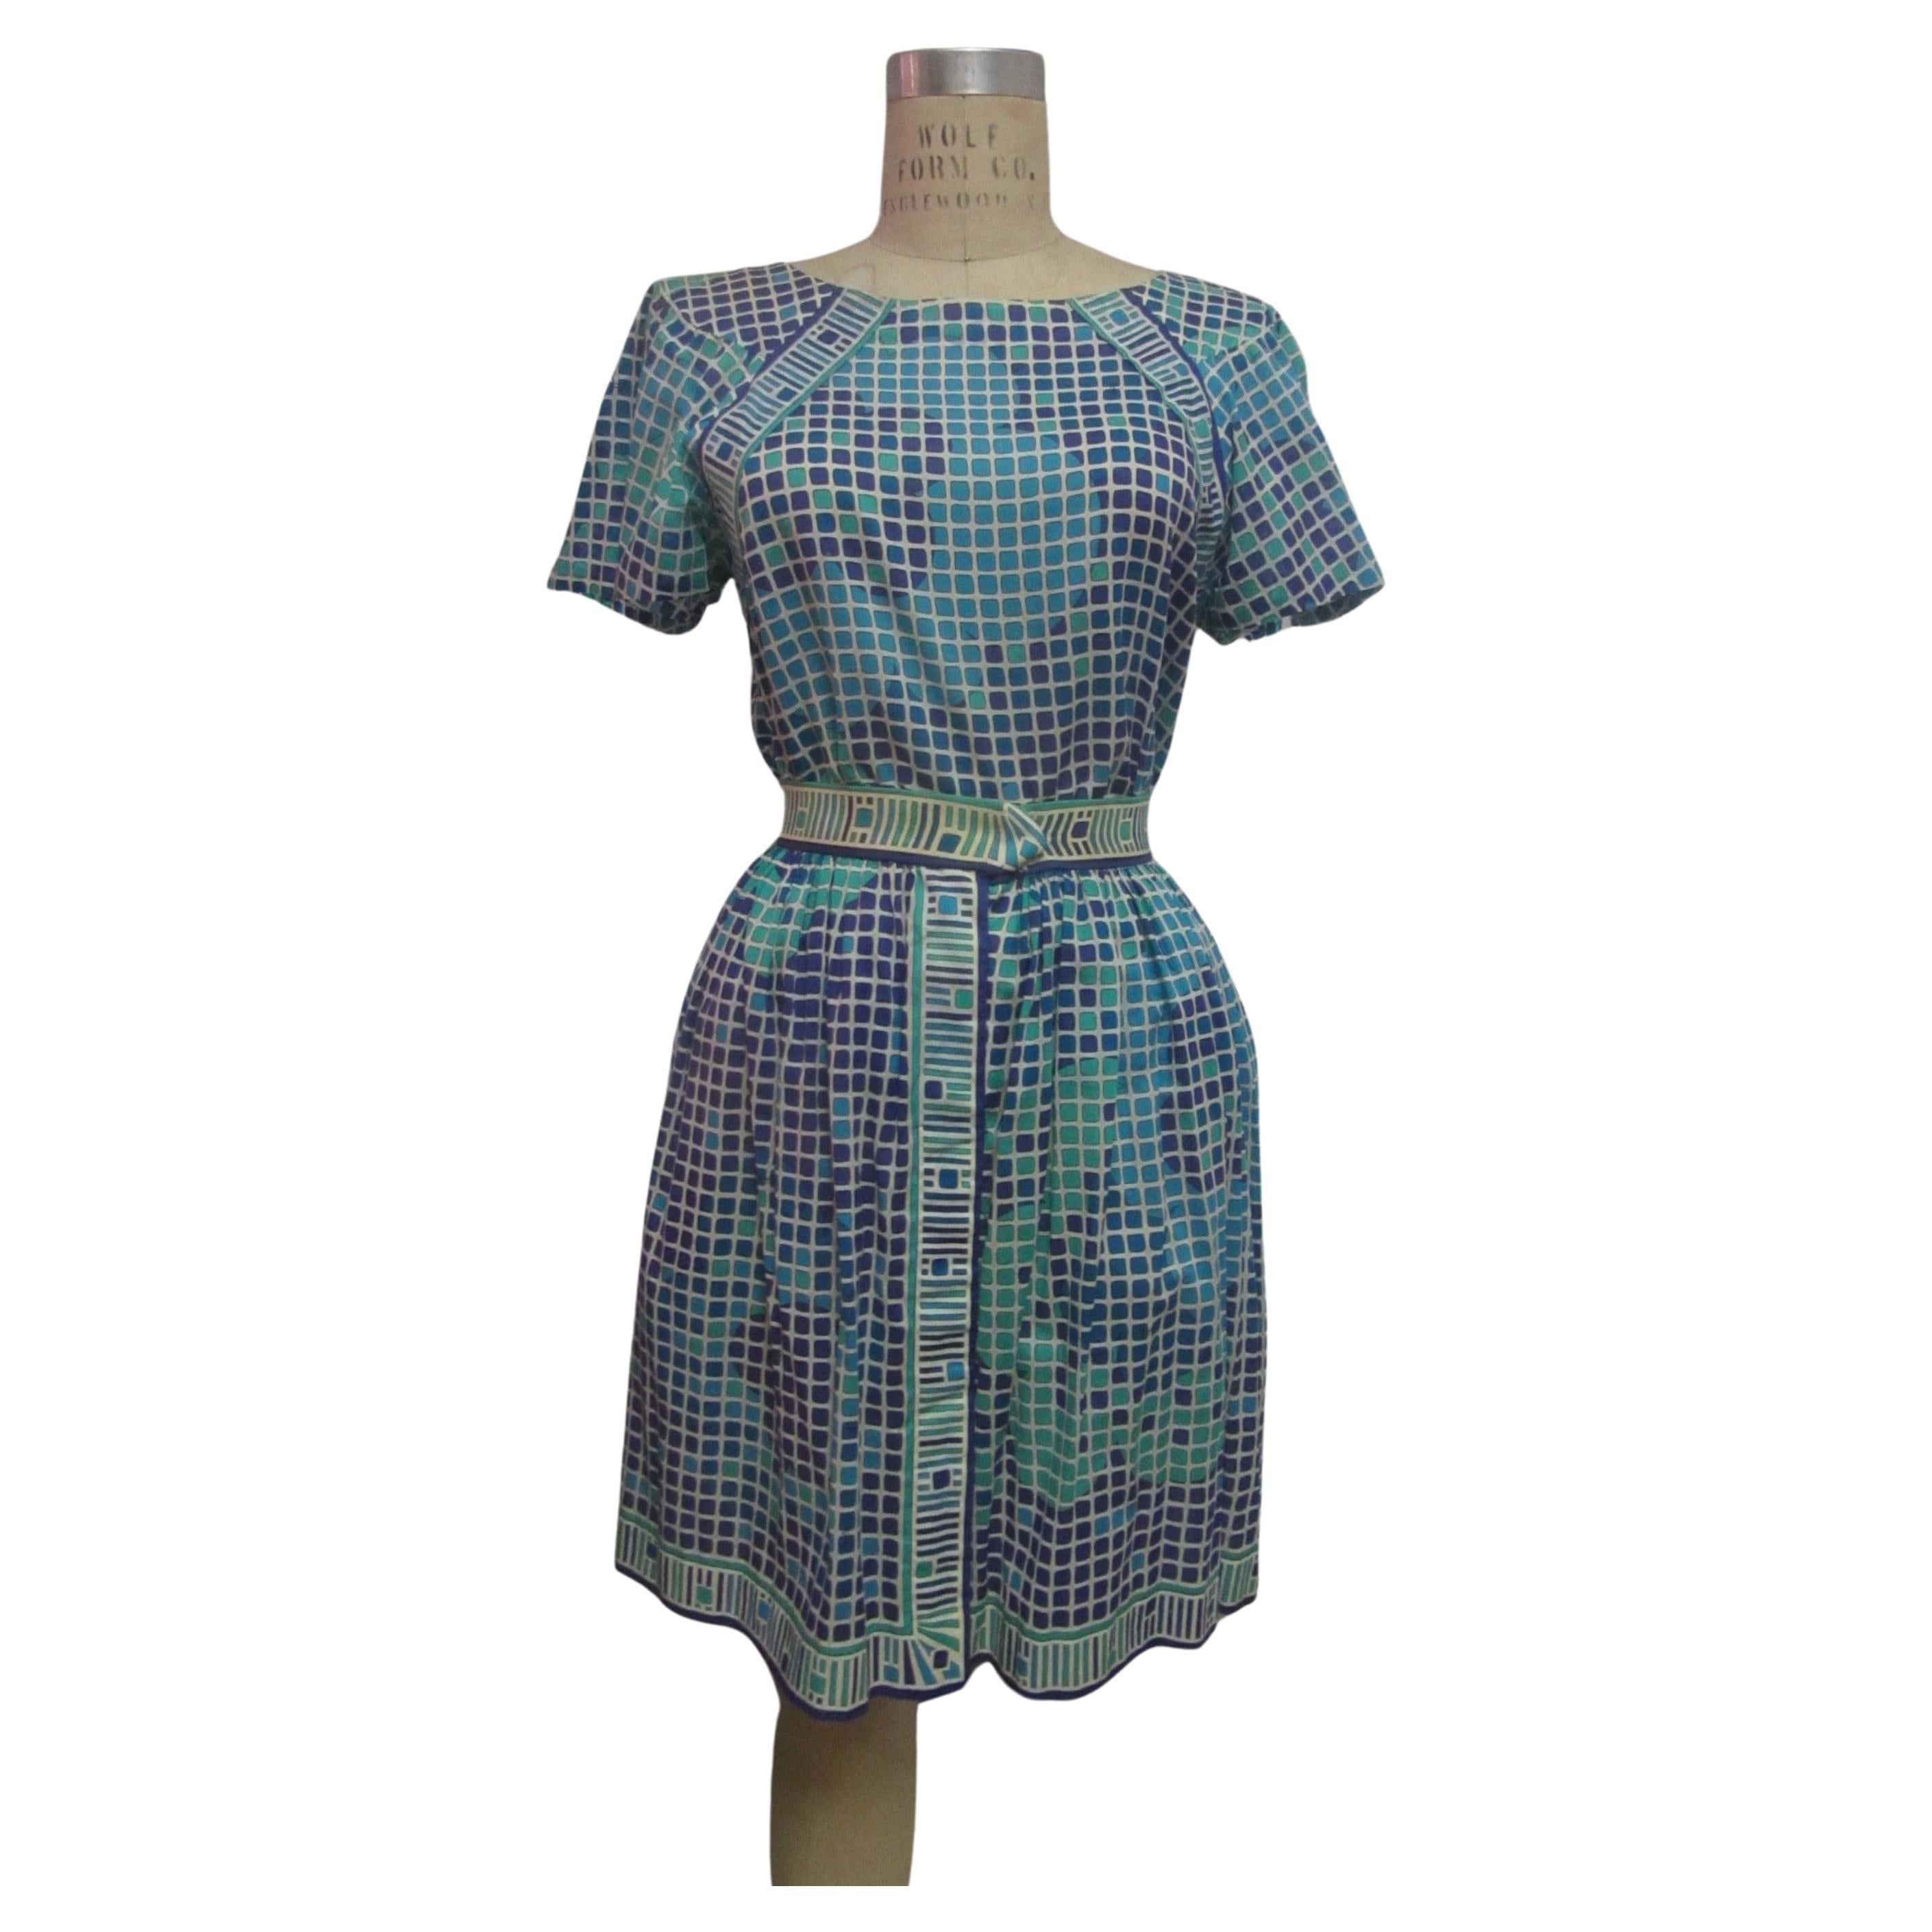 Emilio Pucci cotton geometric print top and skirt set